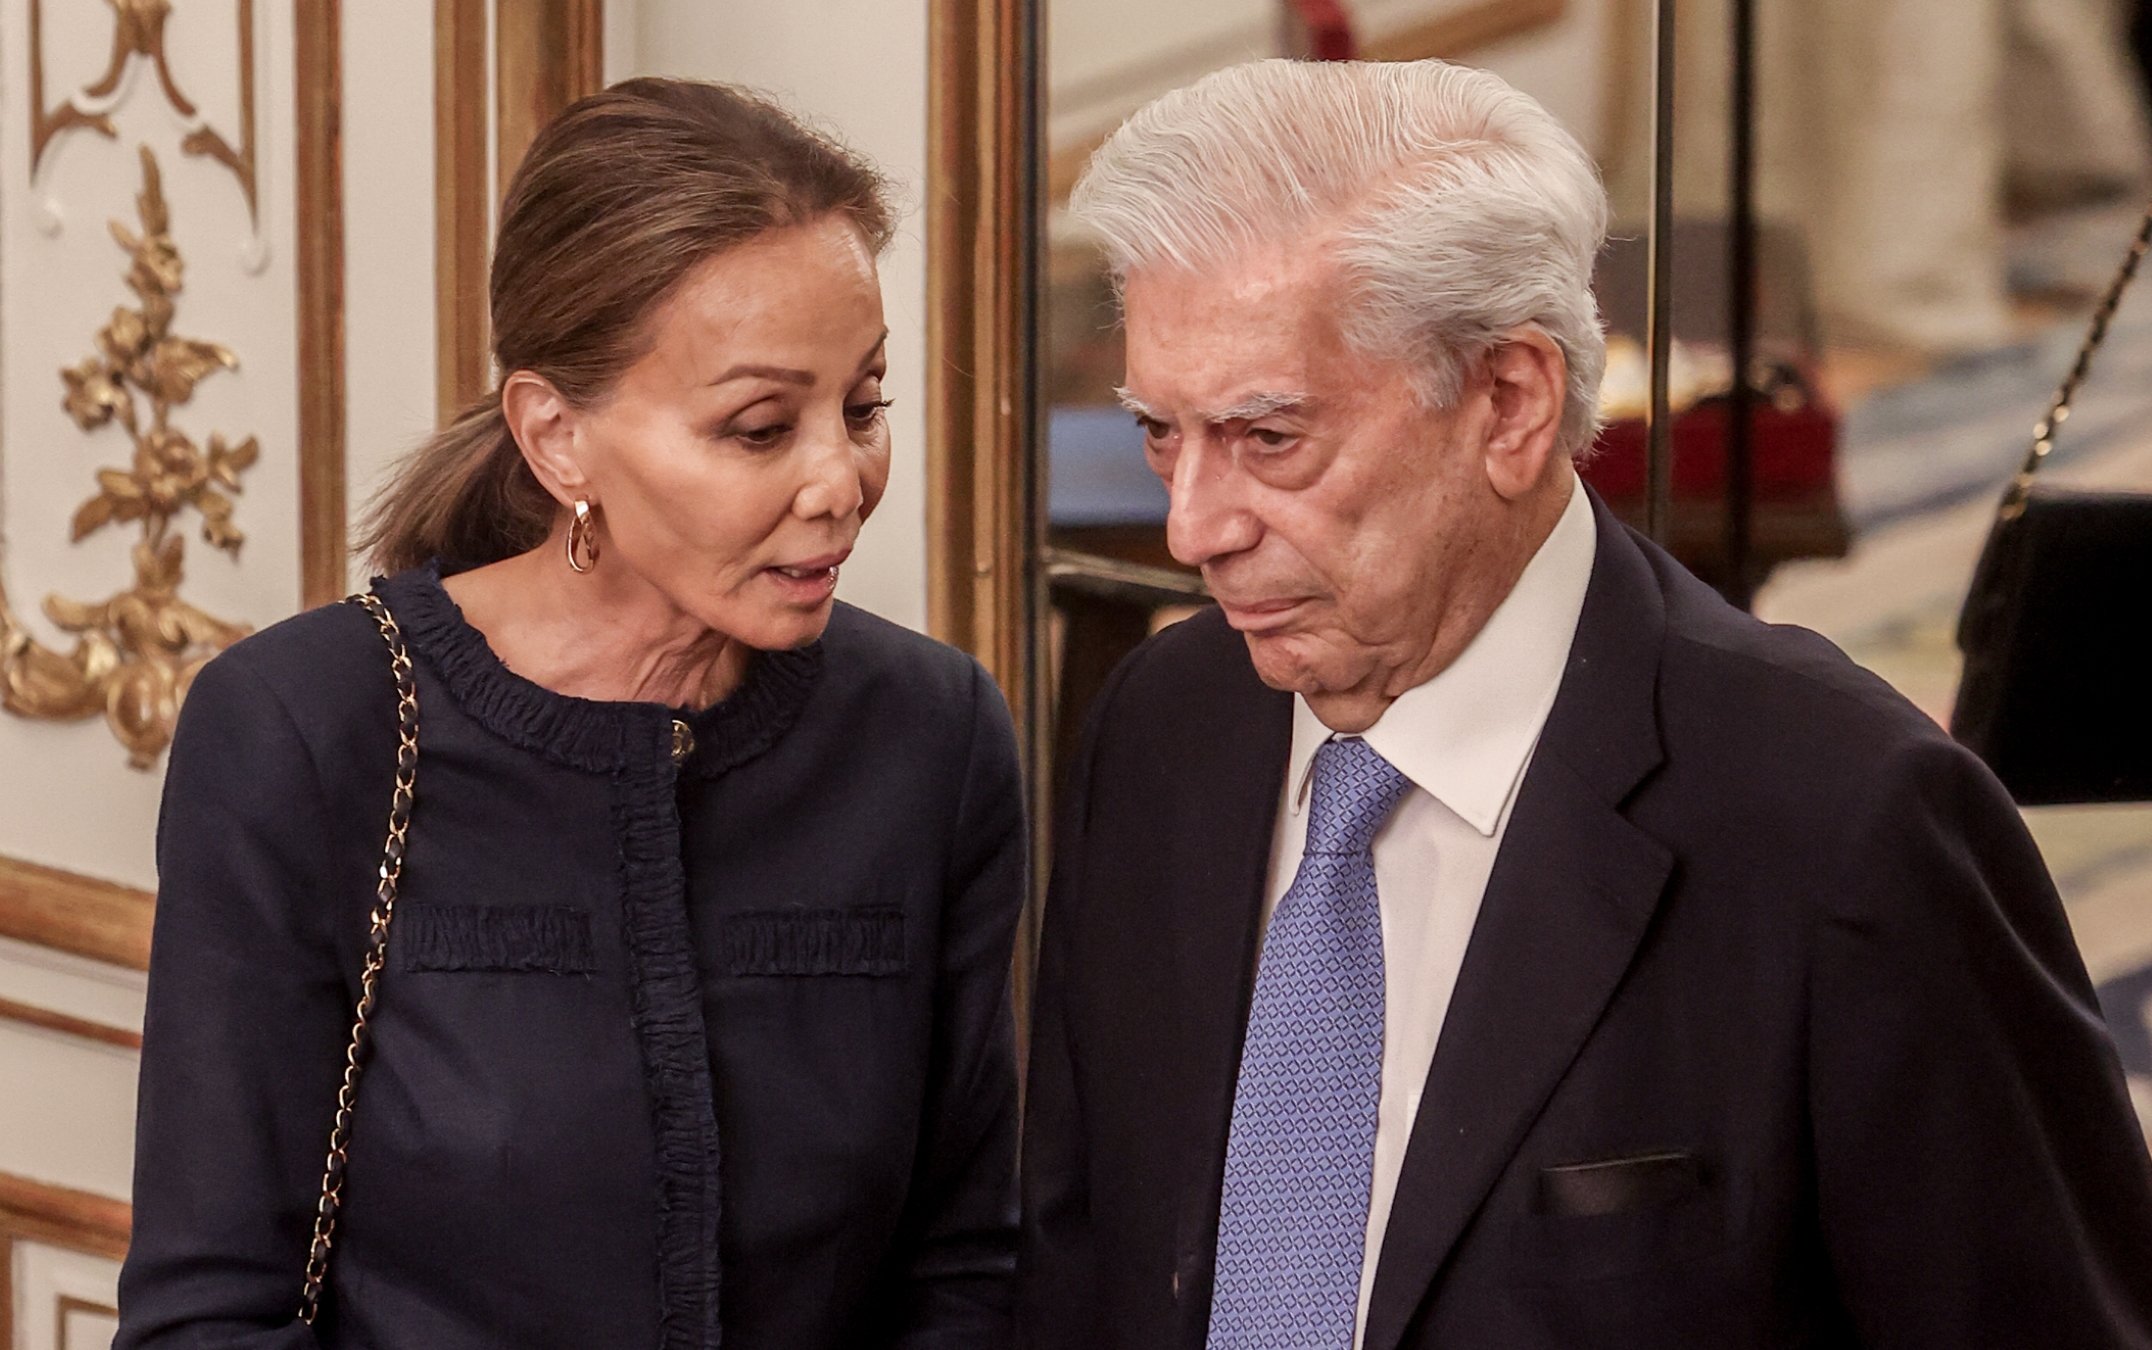 Isabel Preysler furiosa, treu les urpes contra Mario Vargas Llosa: "Cae muy bajo"